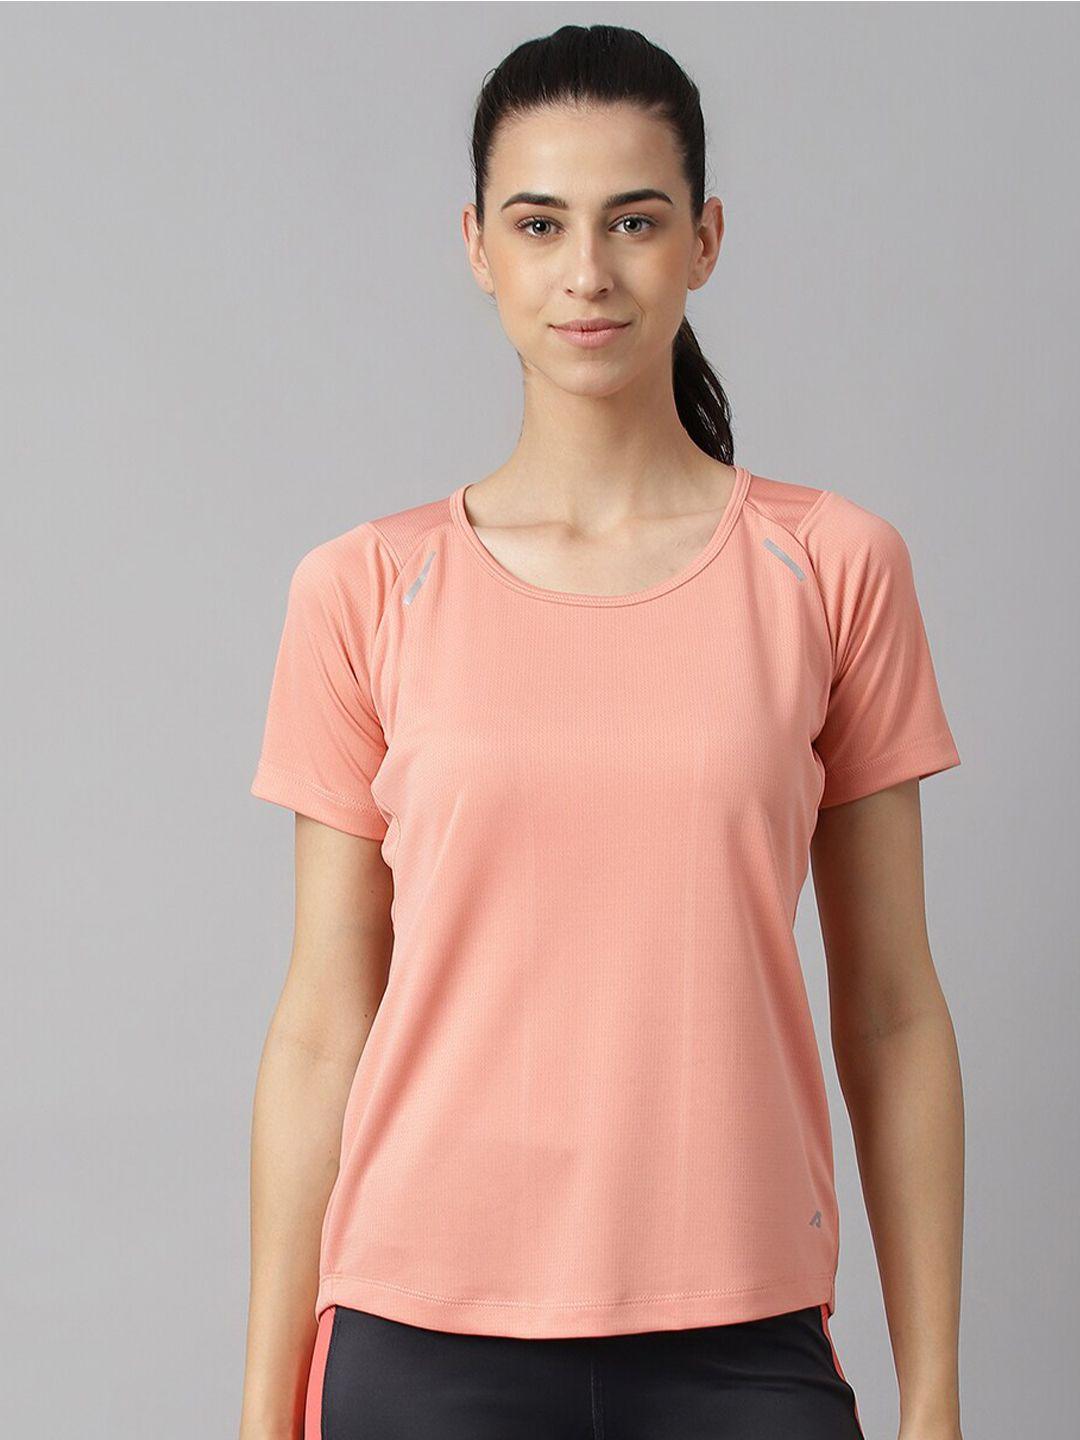 alcis-women-rosette-anti-static-slim-fit-round-neck-sustainable-pro-run-training-t-shirt